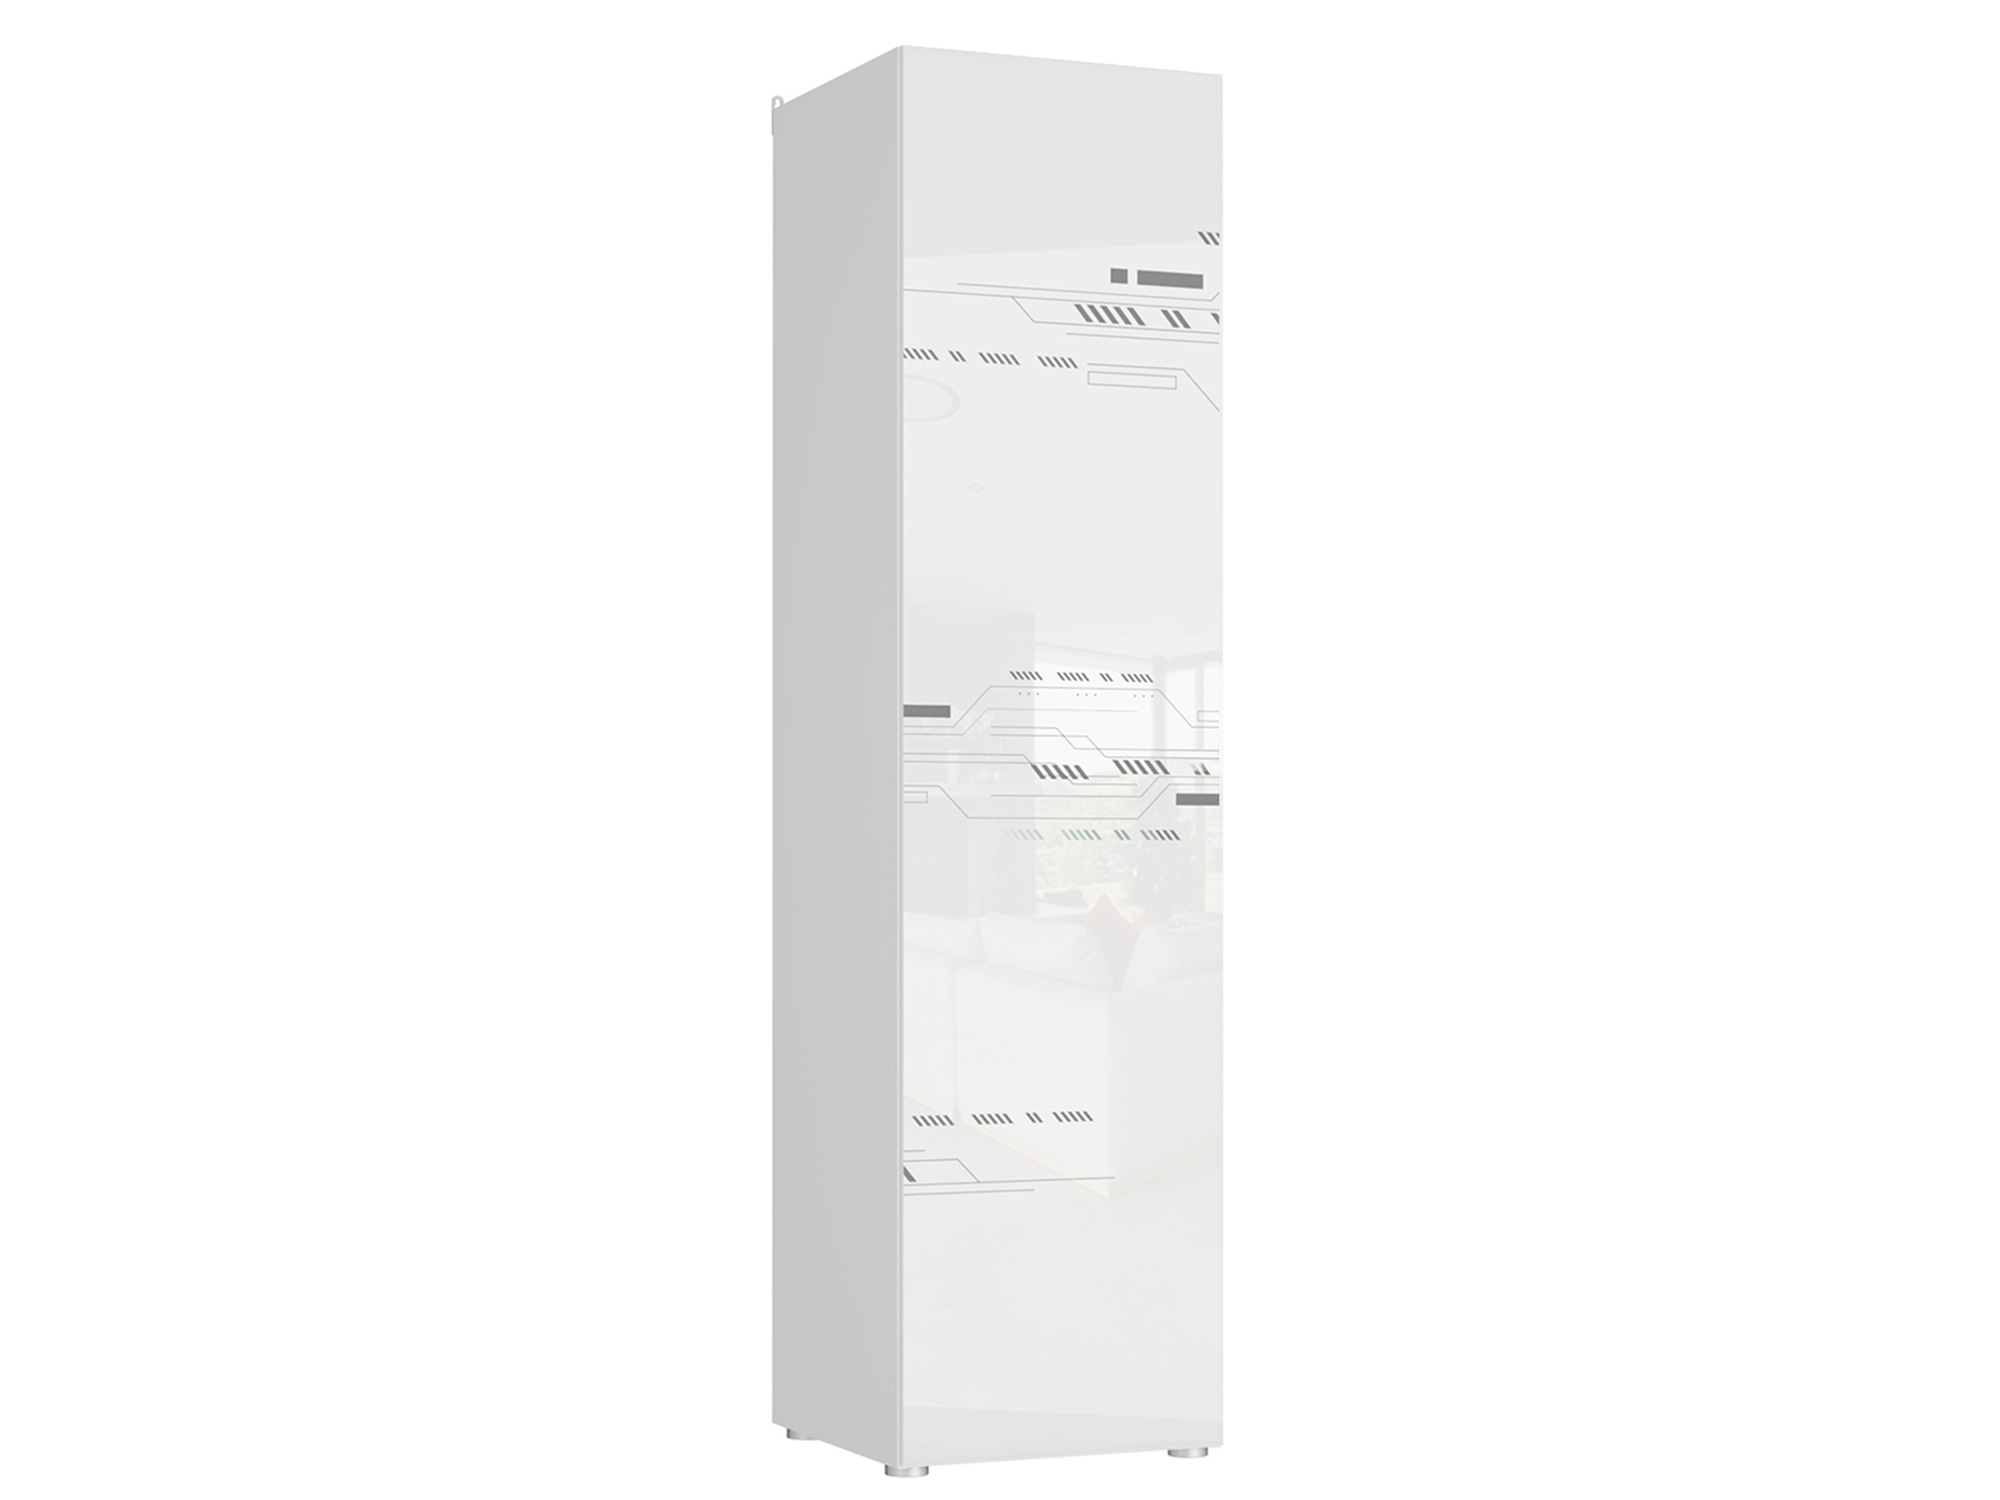 Шкаф 1-дверный Модерн (Modern) Техно Белый глянец, , Белый, МДФ, ЛДСП шкаф 1 дверный модерн modern техно белый глянец белый мдф лдсп